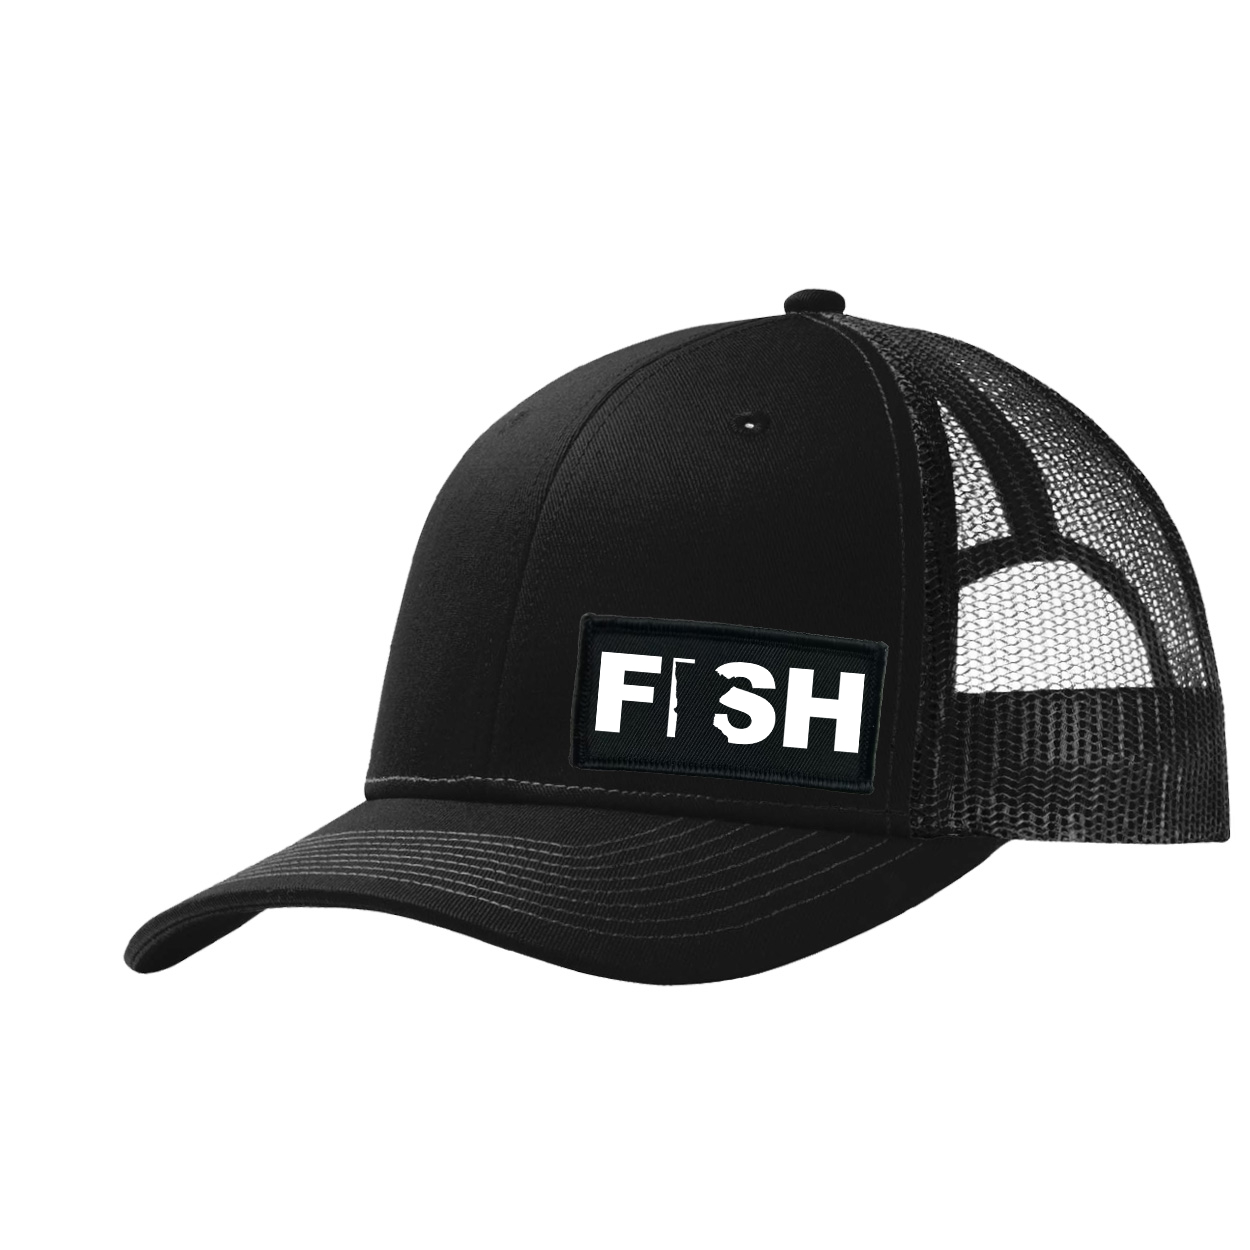 Fish Minnesota Night Out Woven Patch Snapback Trucker Hat Black (White Logo)